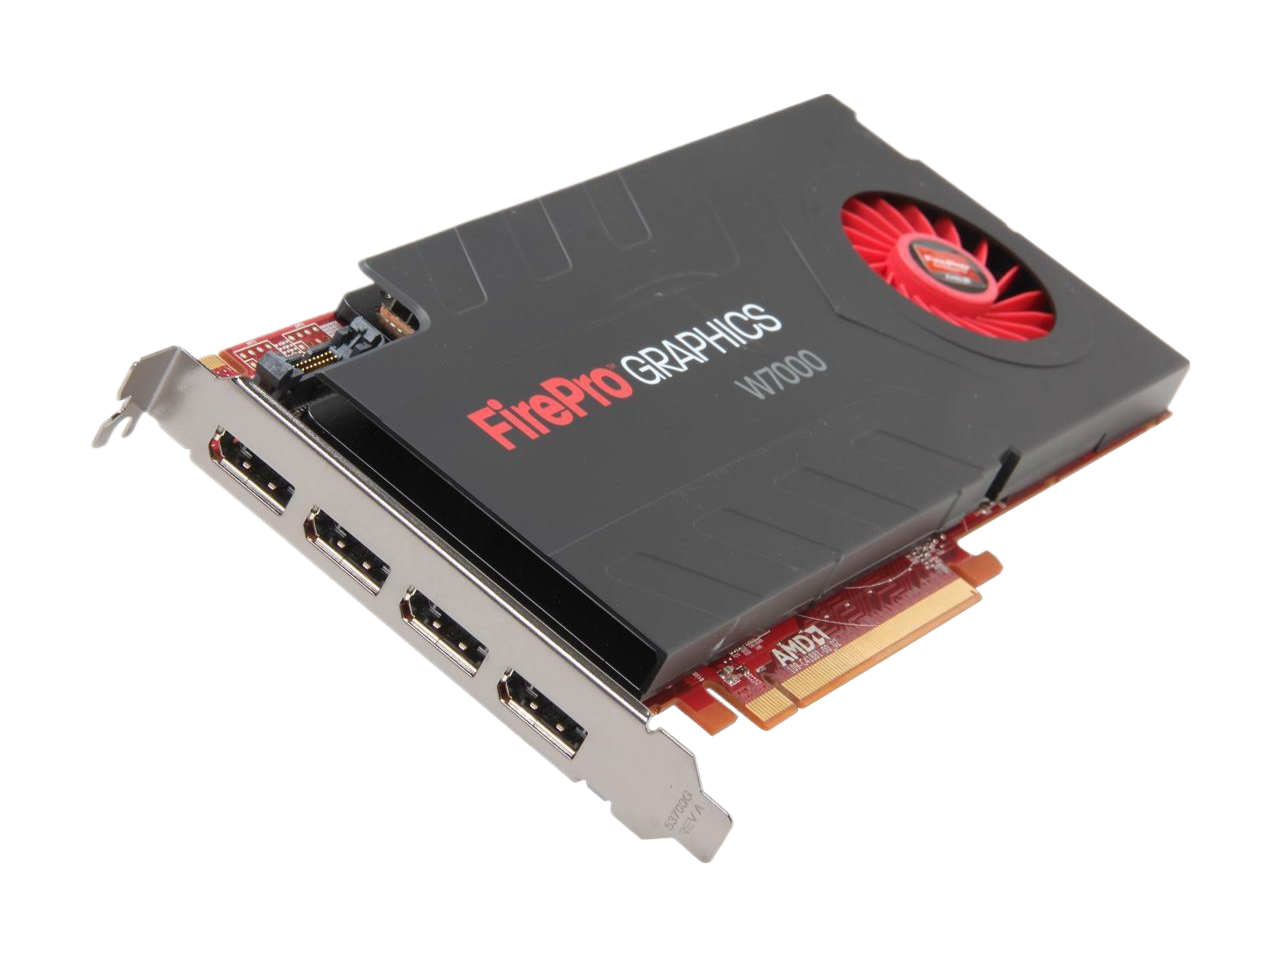 HP AMD FirePro W7000 4GB GDDR5 PCI Express 3.0 x16 Plug-in Card Workstation Video Card C2K00AA